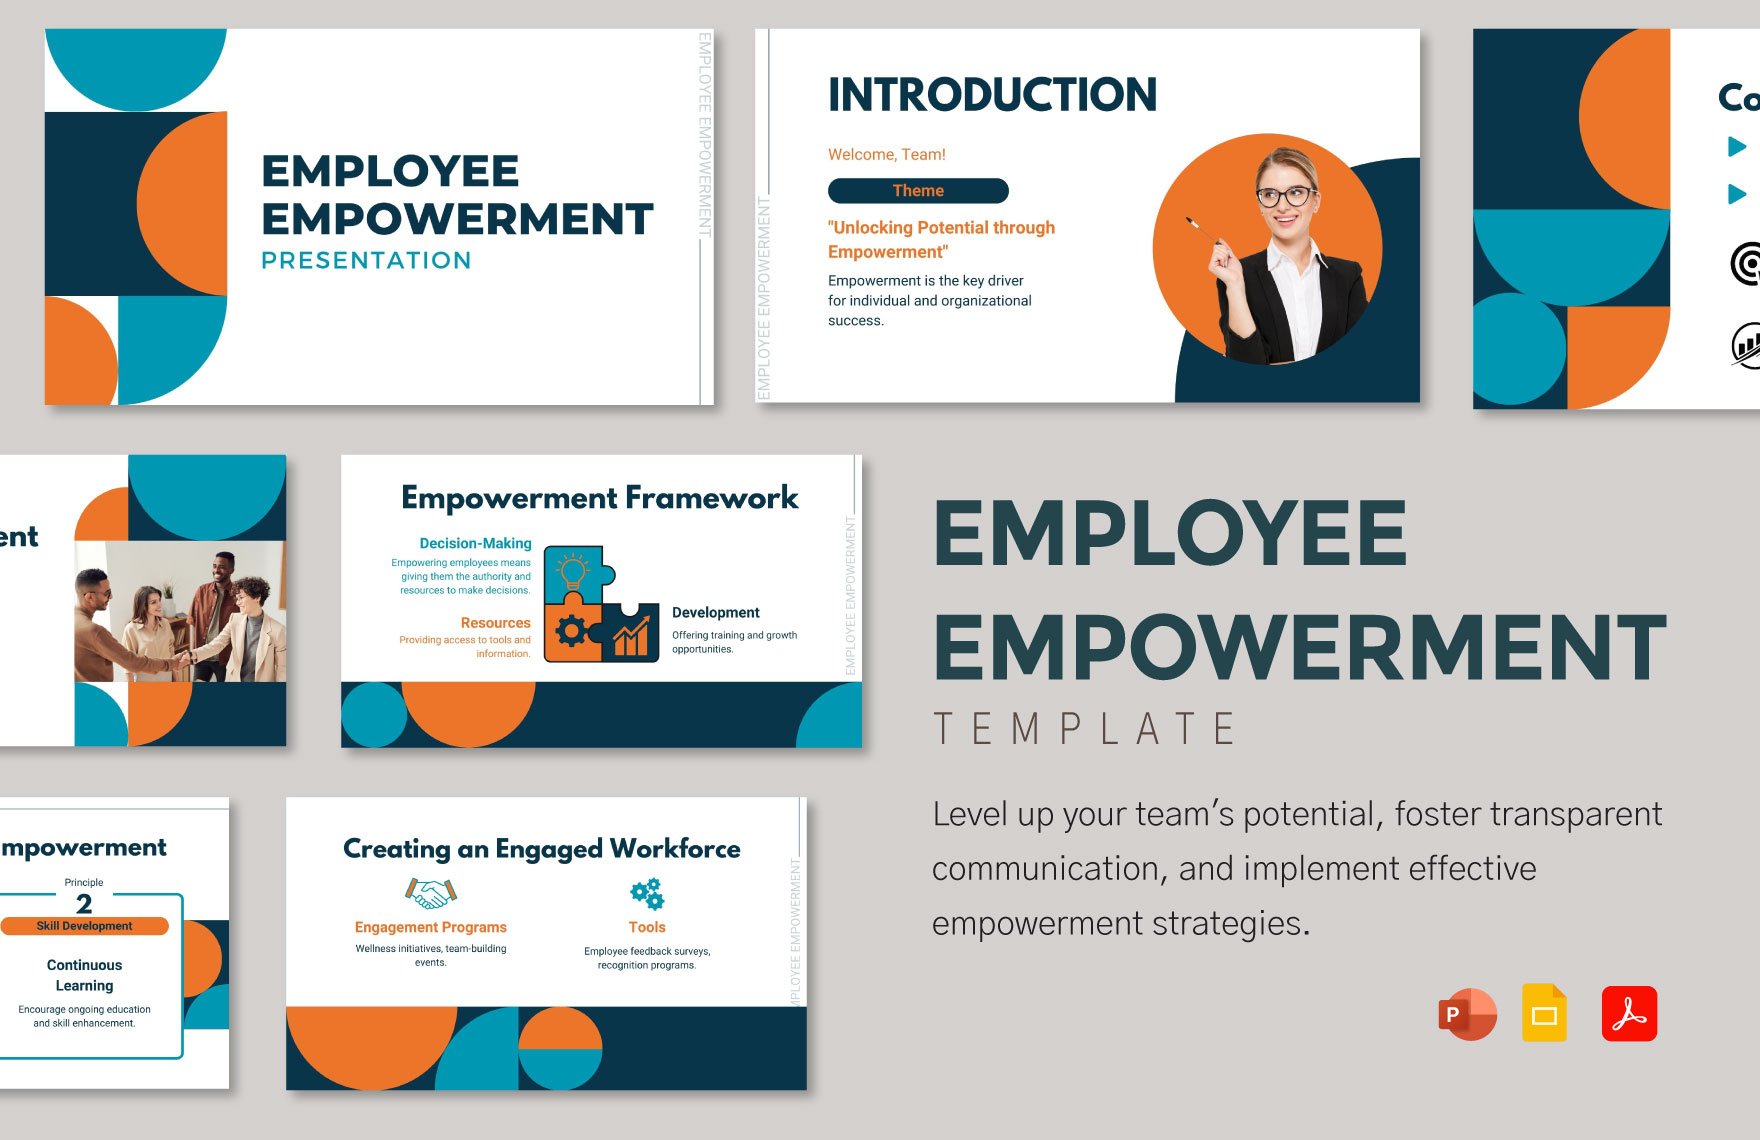 Employee Empowerment Template